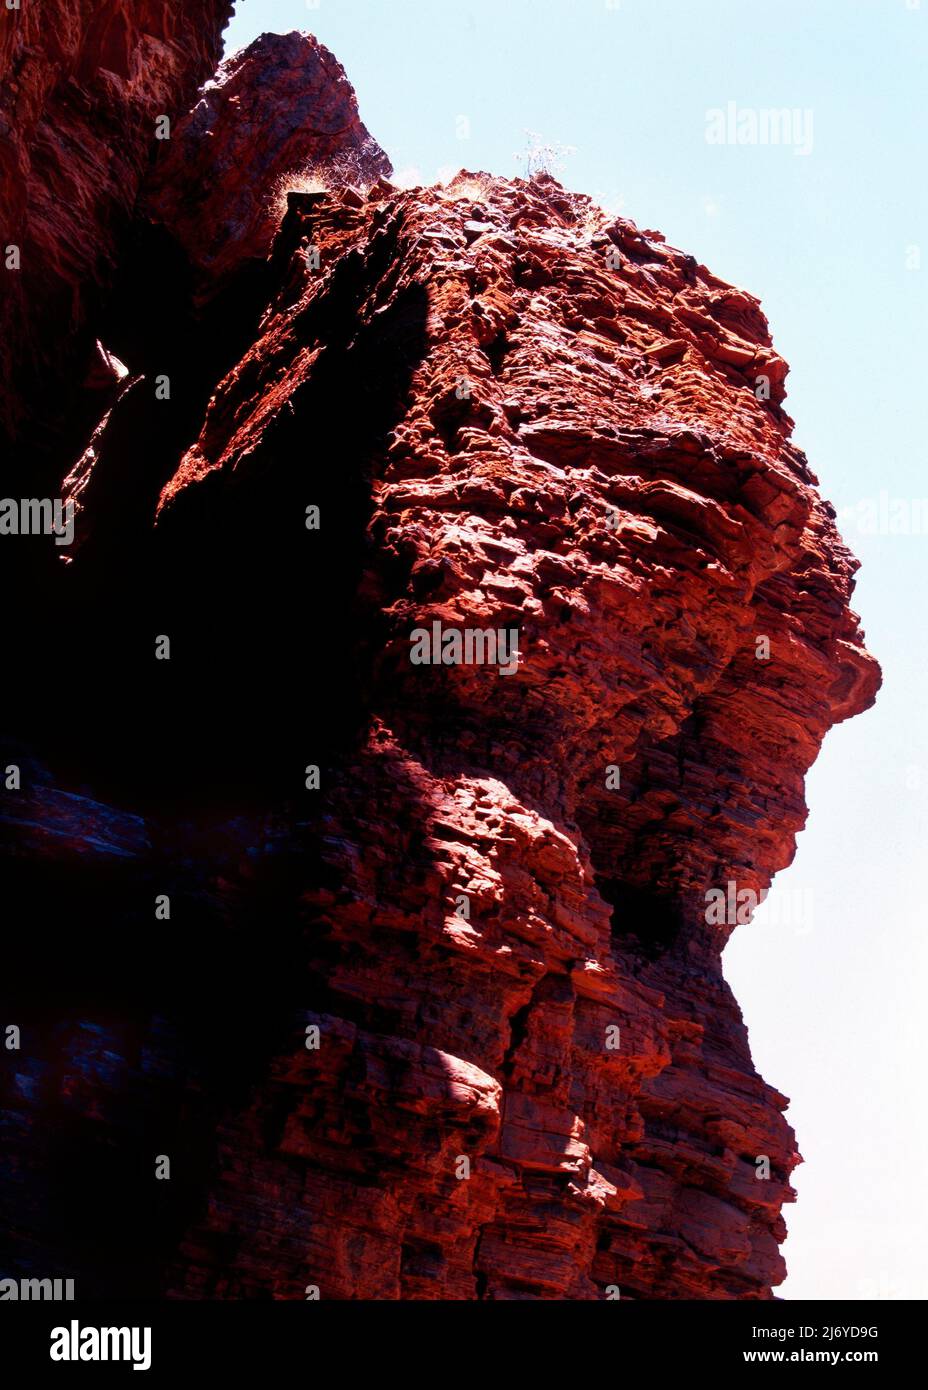 Red Gorge Wall with a profile of a man's face Karijini National Park, Pilbara, Western Australia Stock Photo